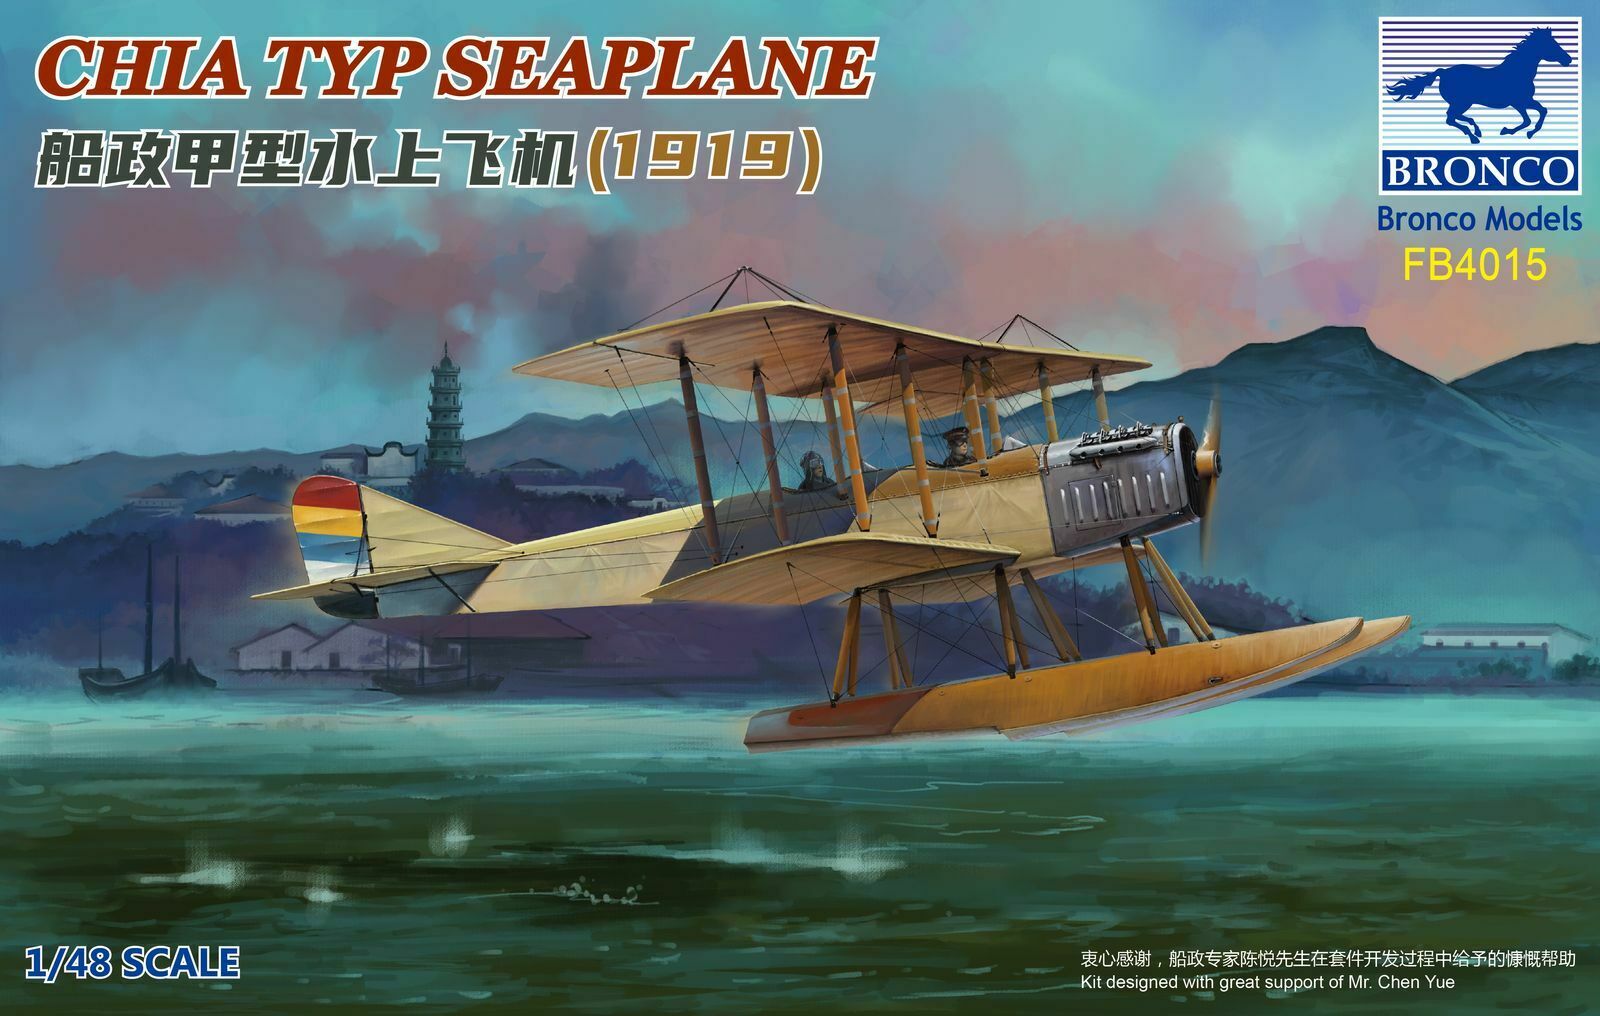 FB4015  авиация  CHIA TYP SEAPLANE 1919  (1:48)